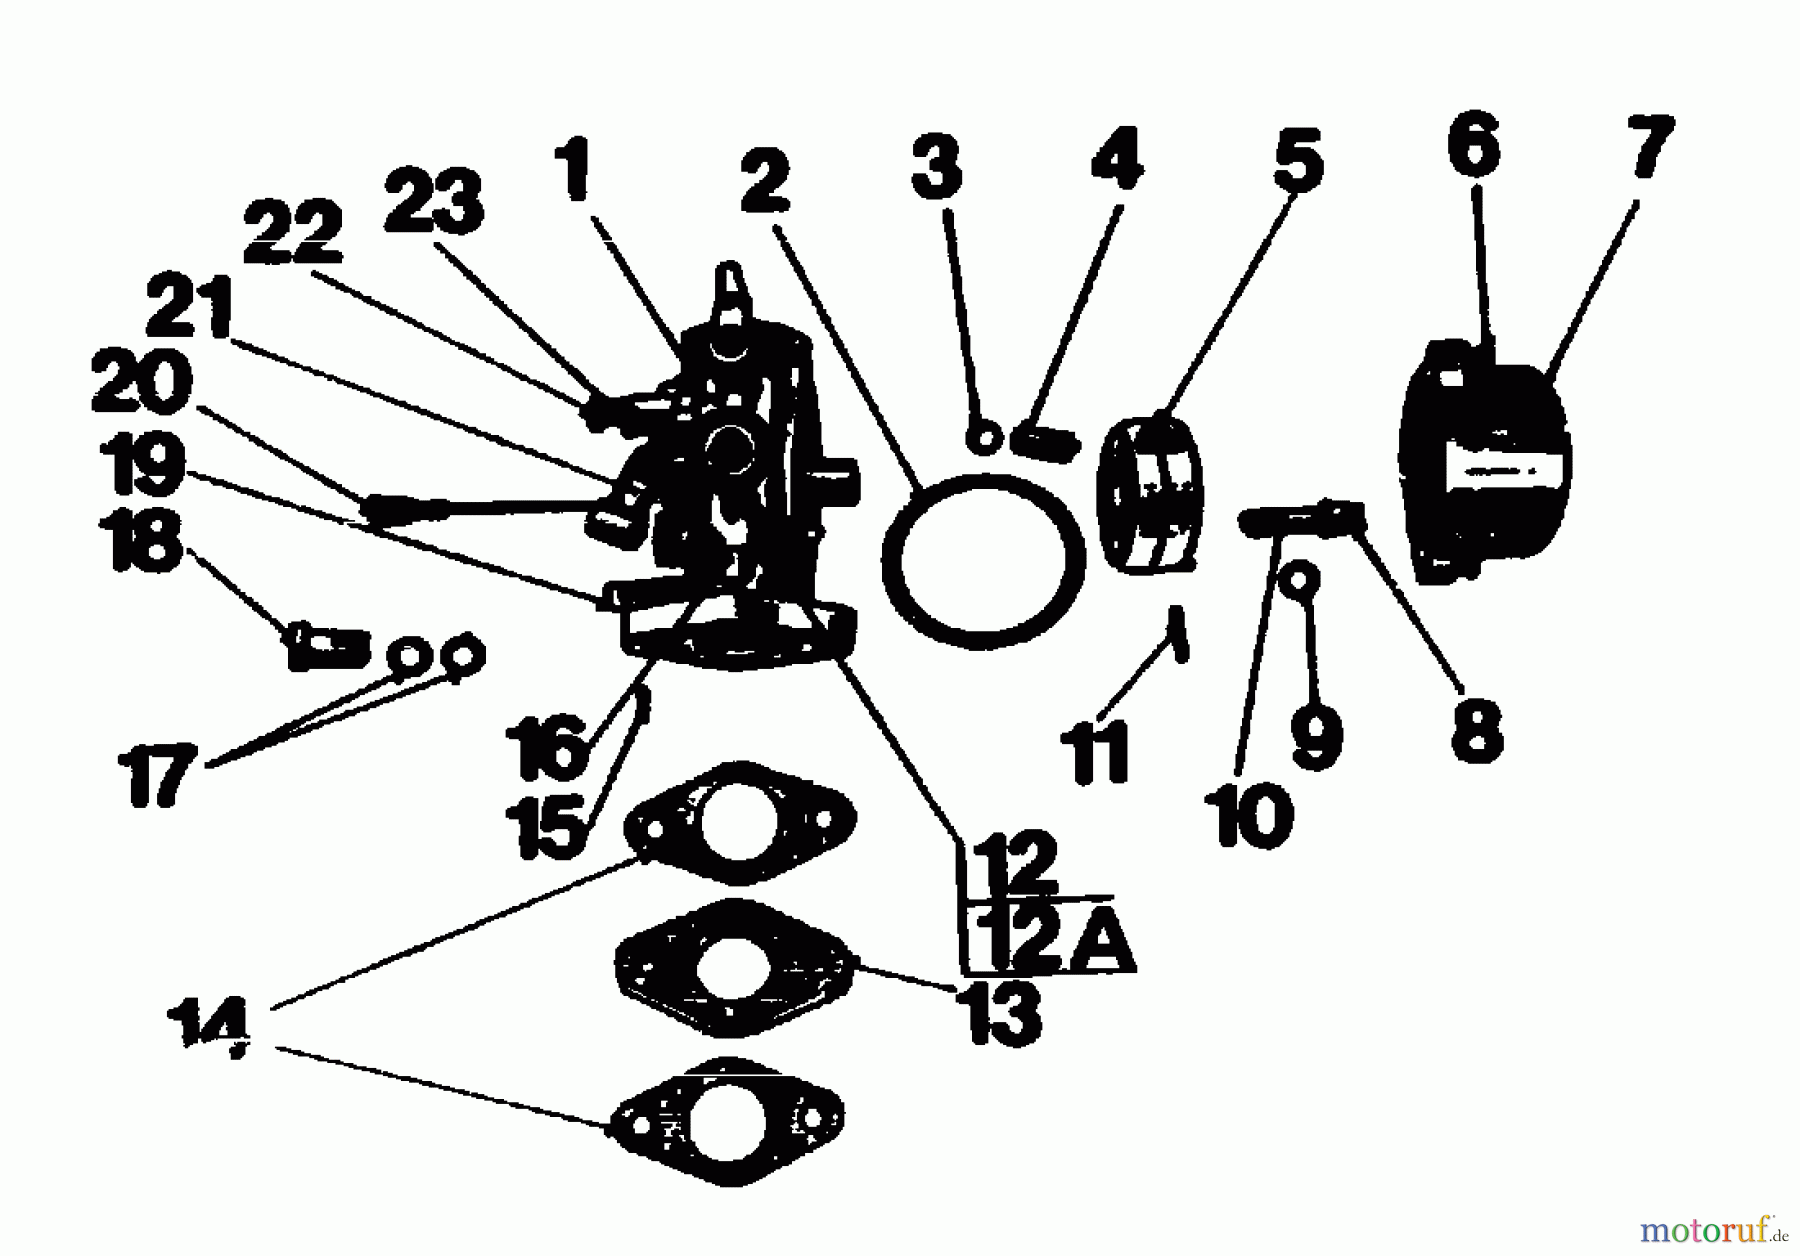  Gutbrod Motofaucheuse BM 100-2/G 07507.01  (1988) Carburateur